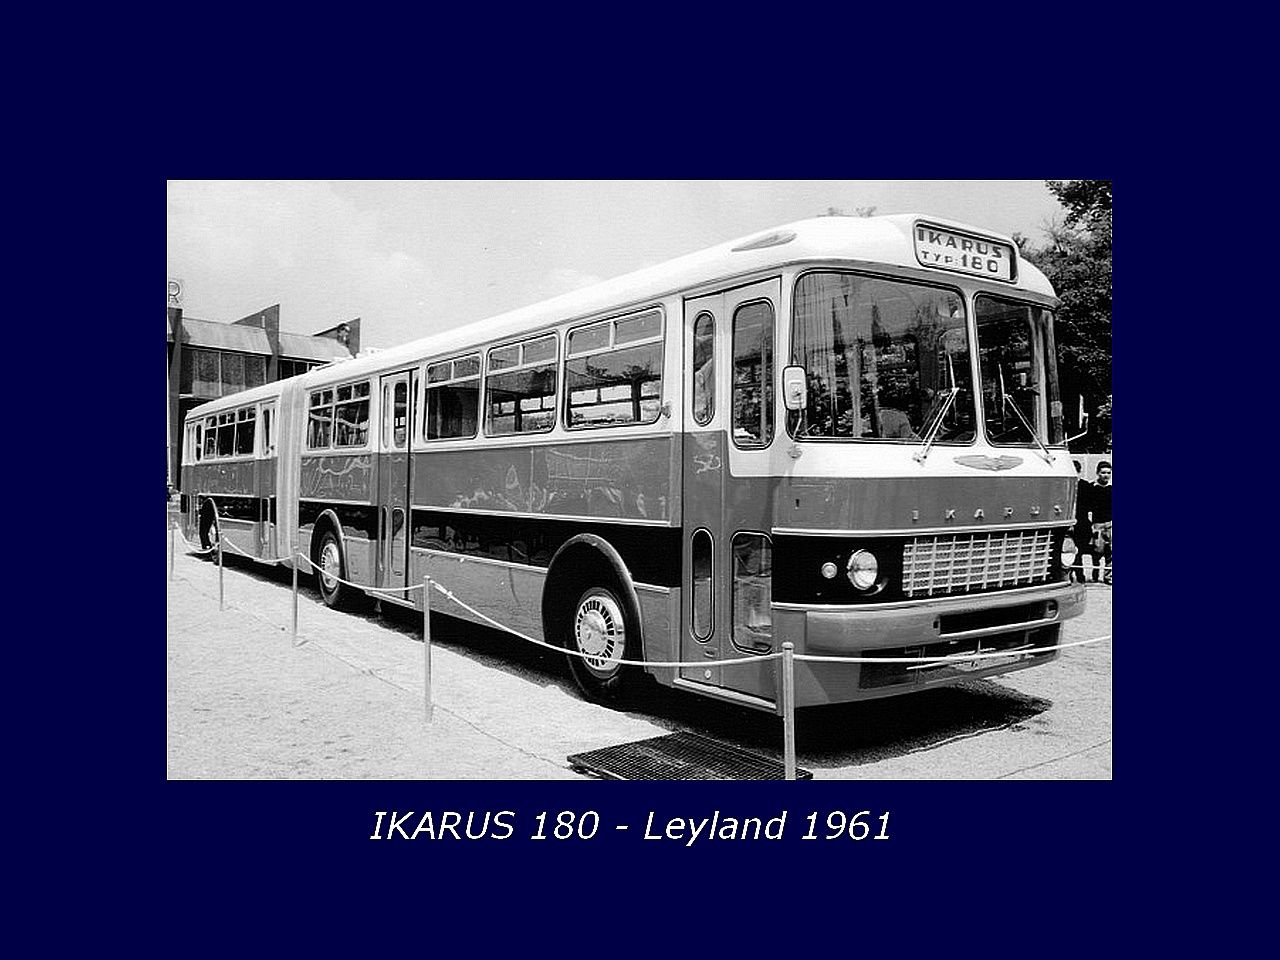 Magyar Busz, Ikarus 180 - Leyland 1961